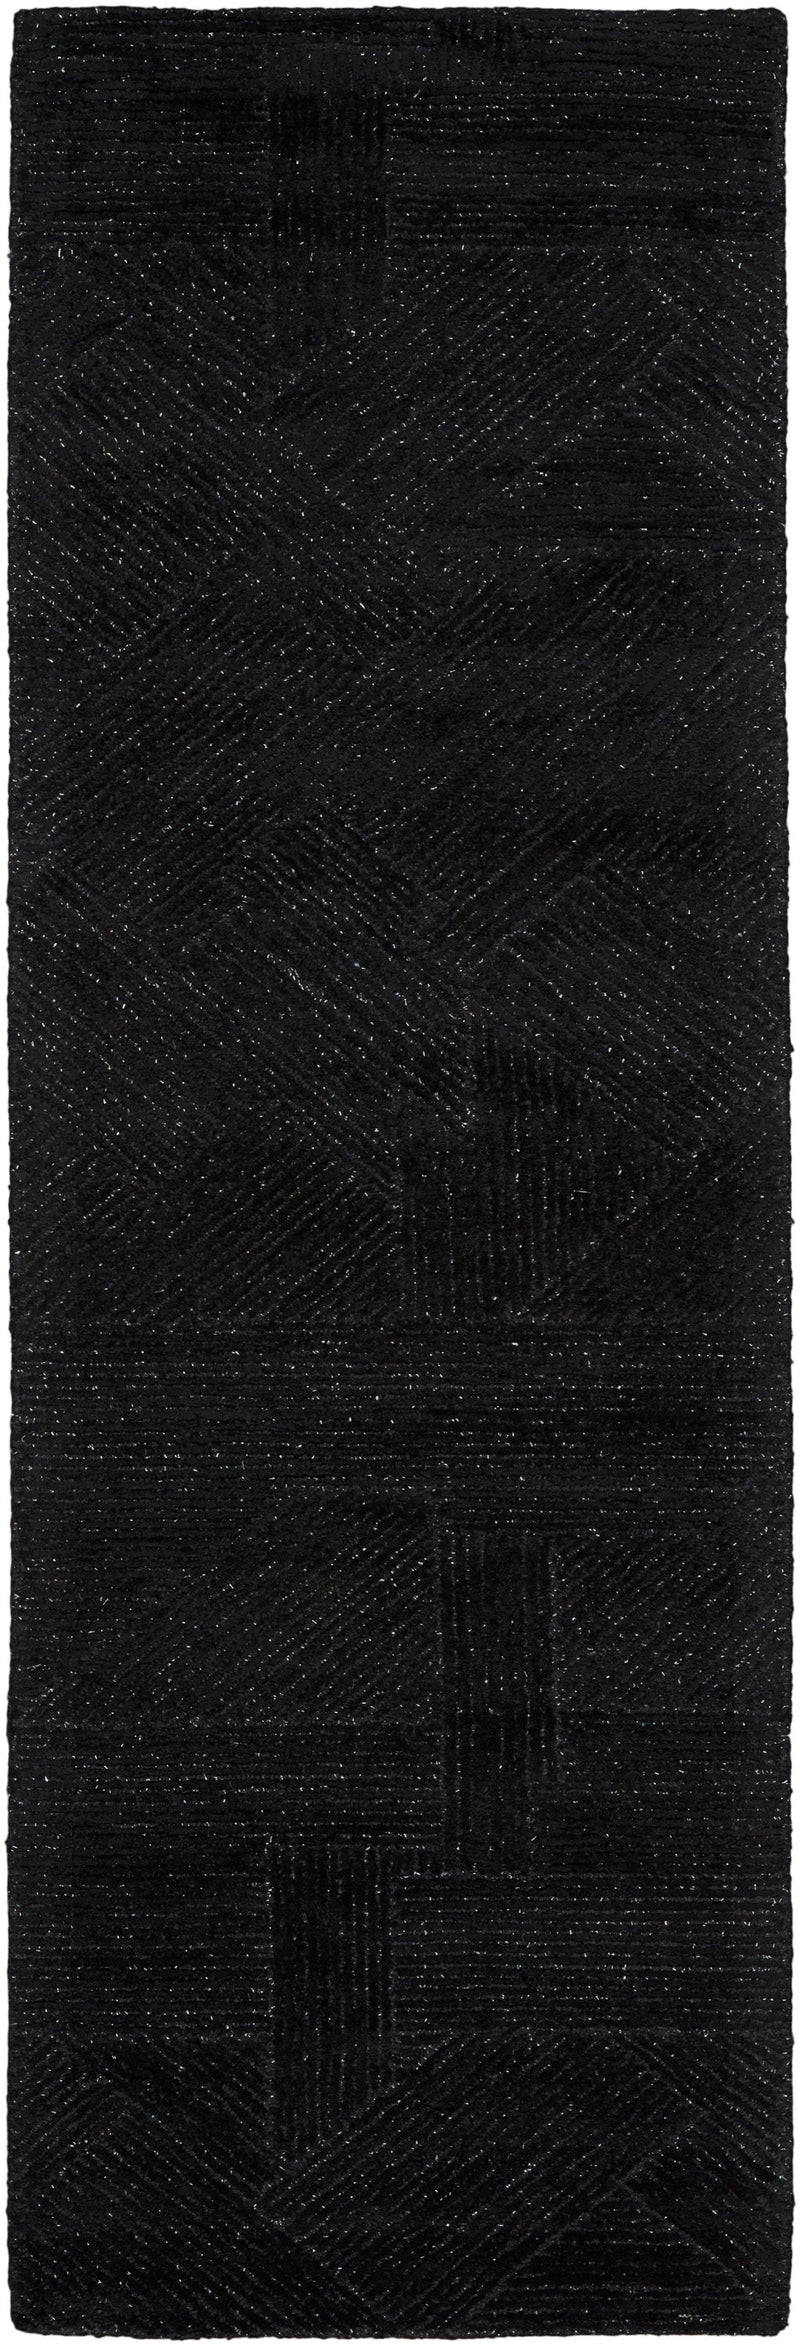 media image for ma30 star handmade black rug by nourison 99446880871 redo 2 283